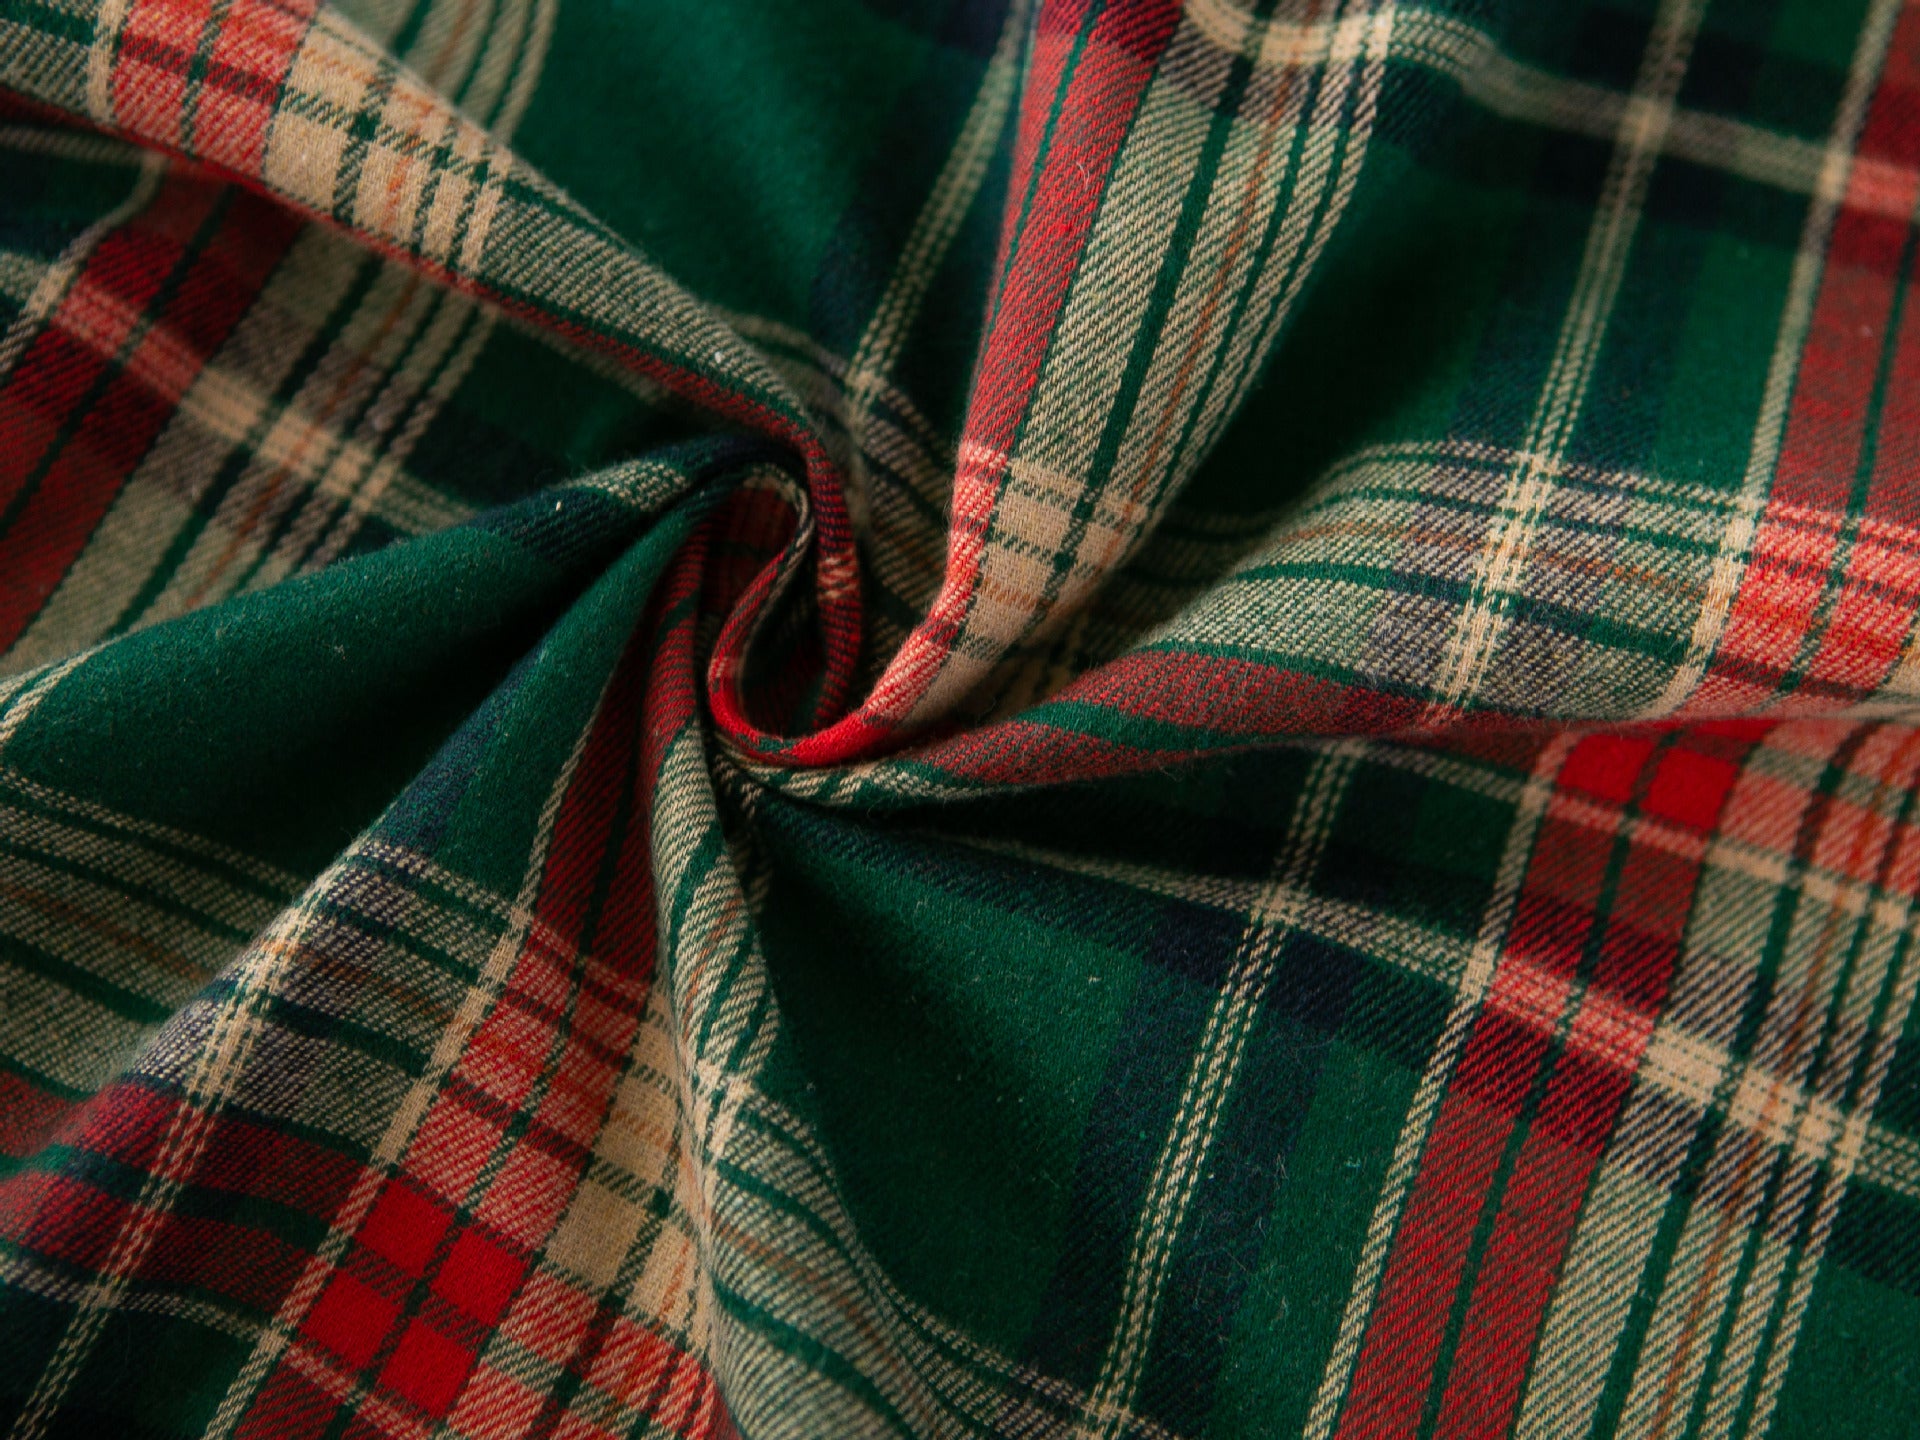 Retro Rectangle Plaid Christmas Green Tablecloth